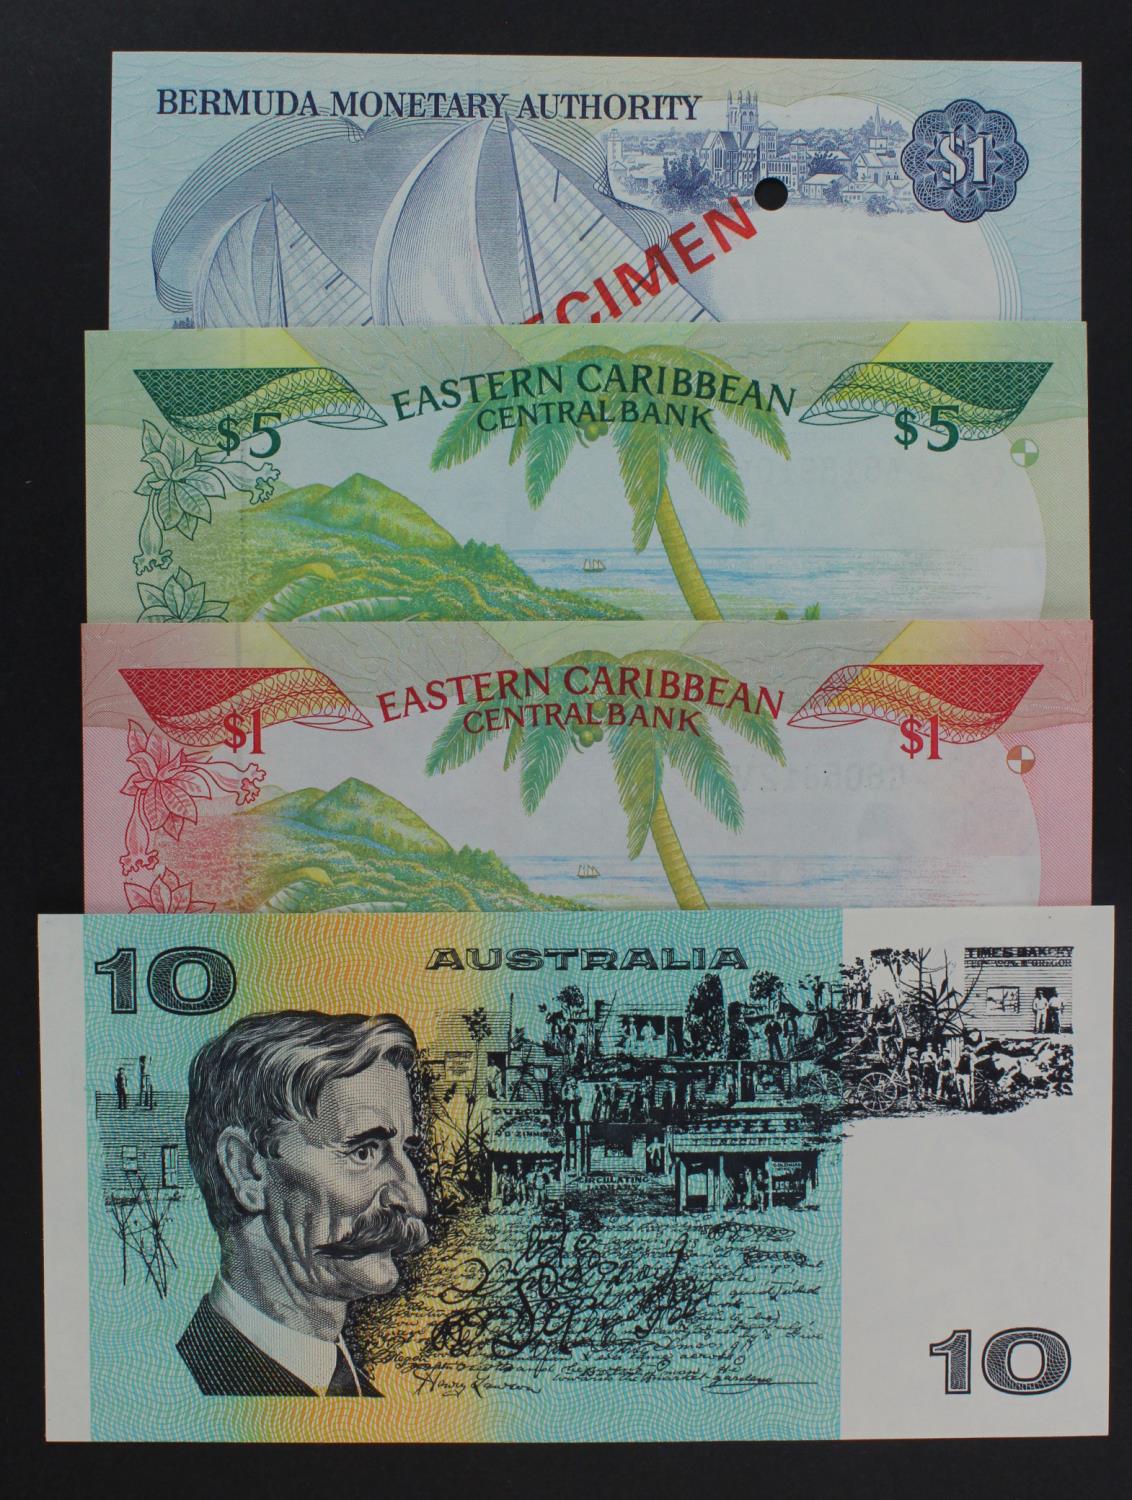 British Commonwealth (4), Bermuda 1 Dollar dated 1st May 1984, SPECIMEN note (TBB B201fs, - Image 2 of 2